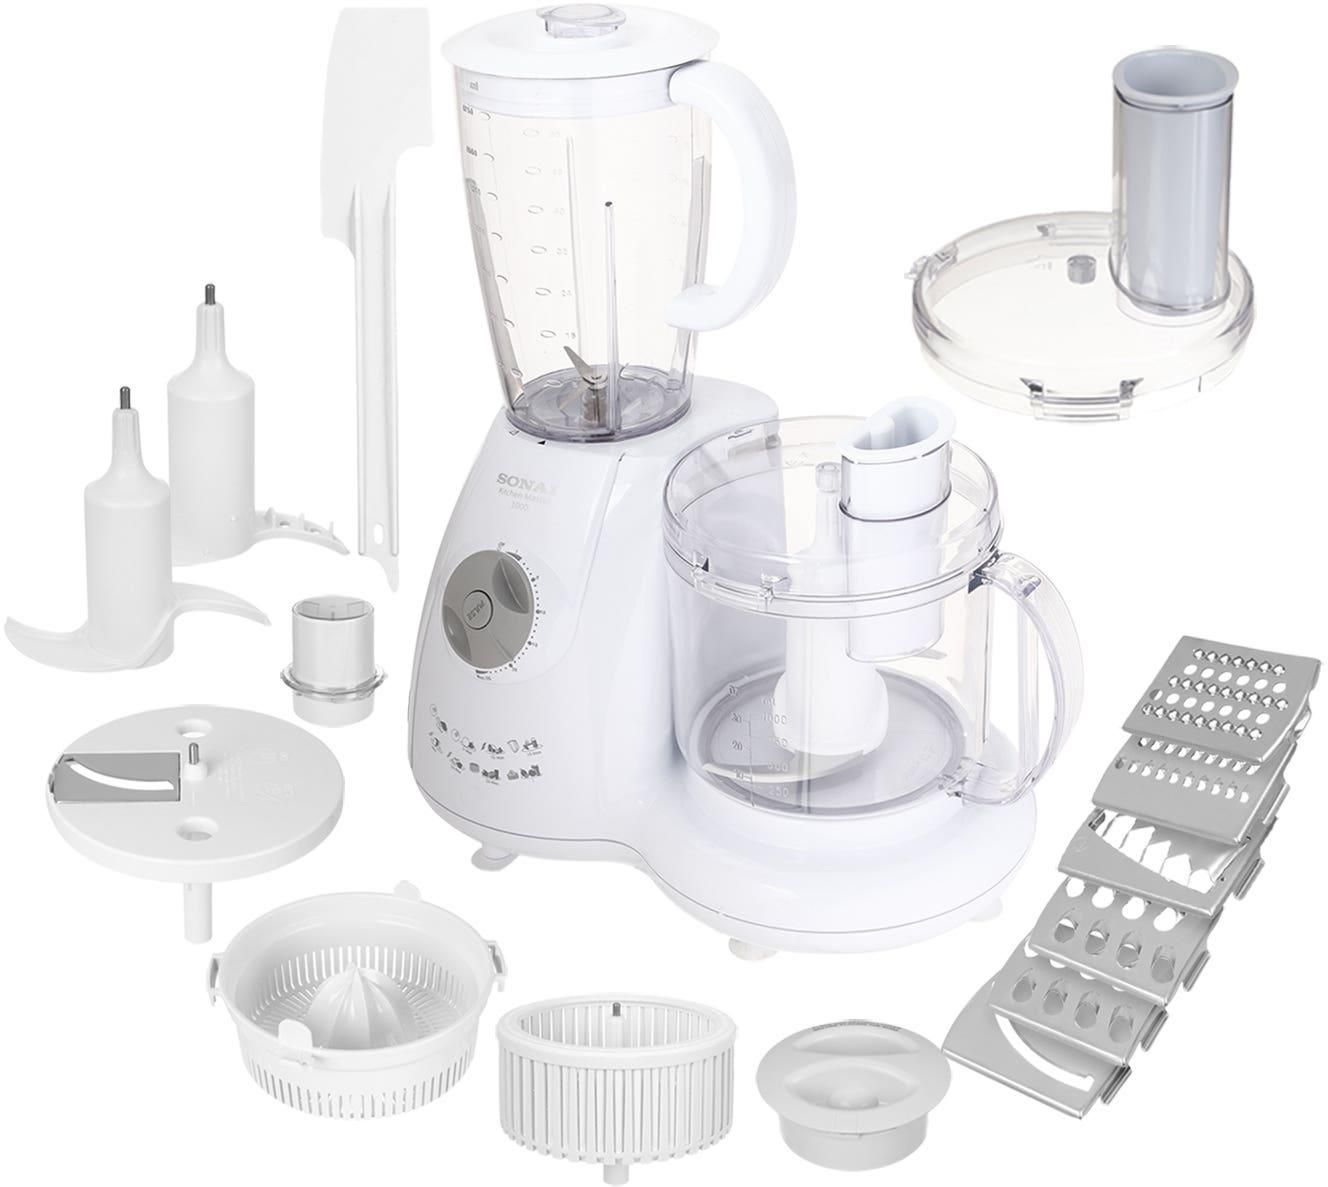 Get Sonai Sh-3850 Kitchen Master Food Processor, 1000 Watt - White with best offers | Raneen.com